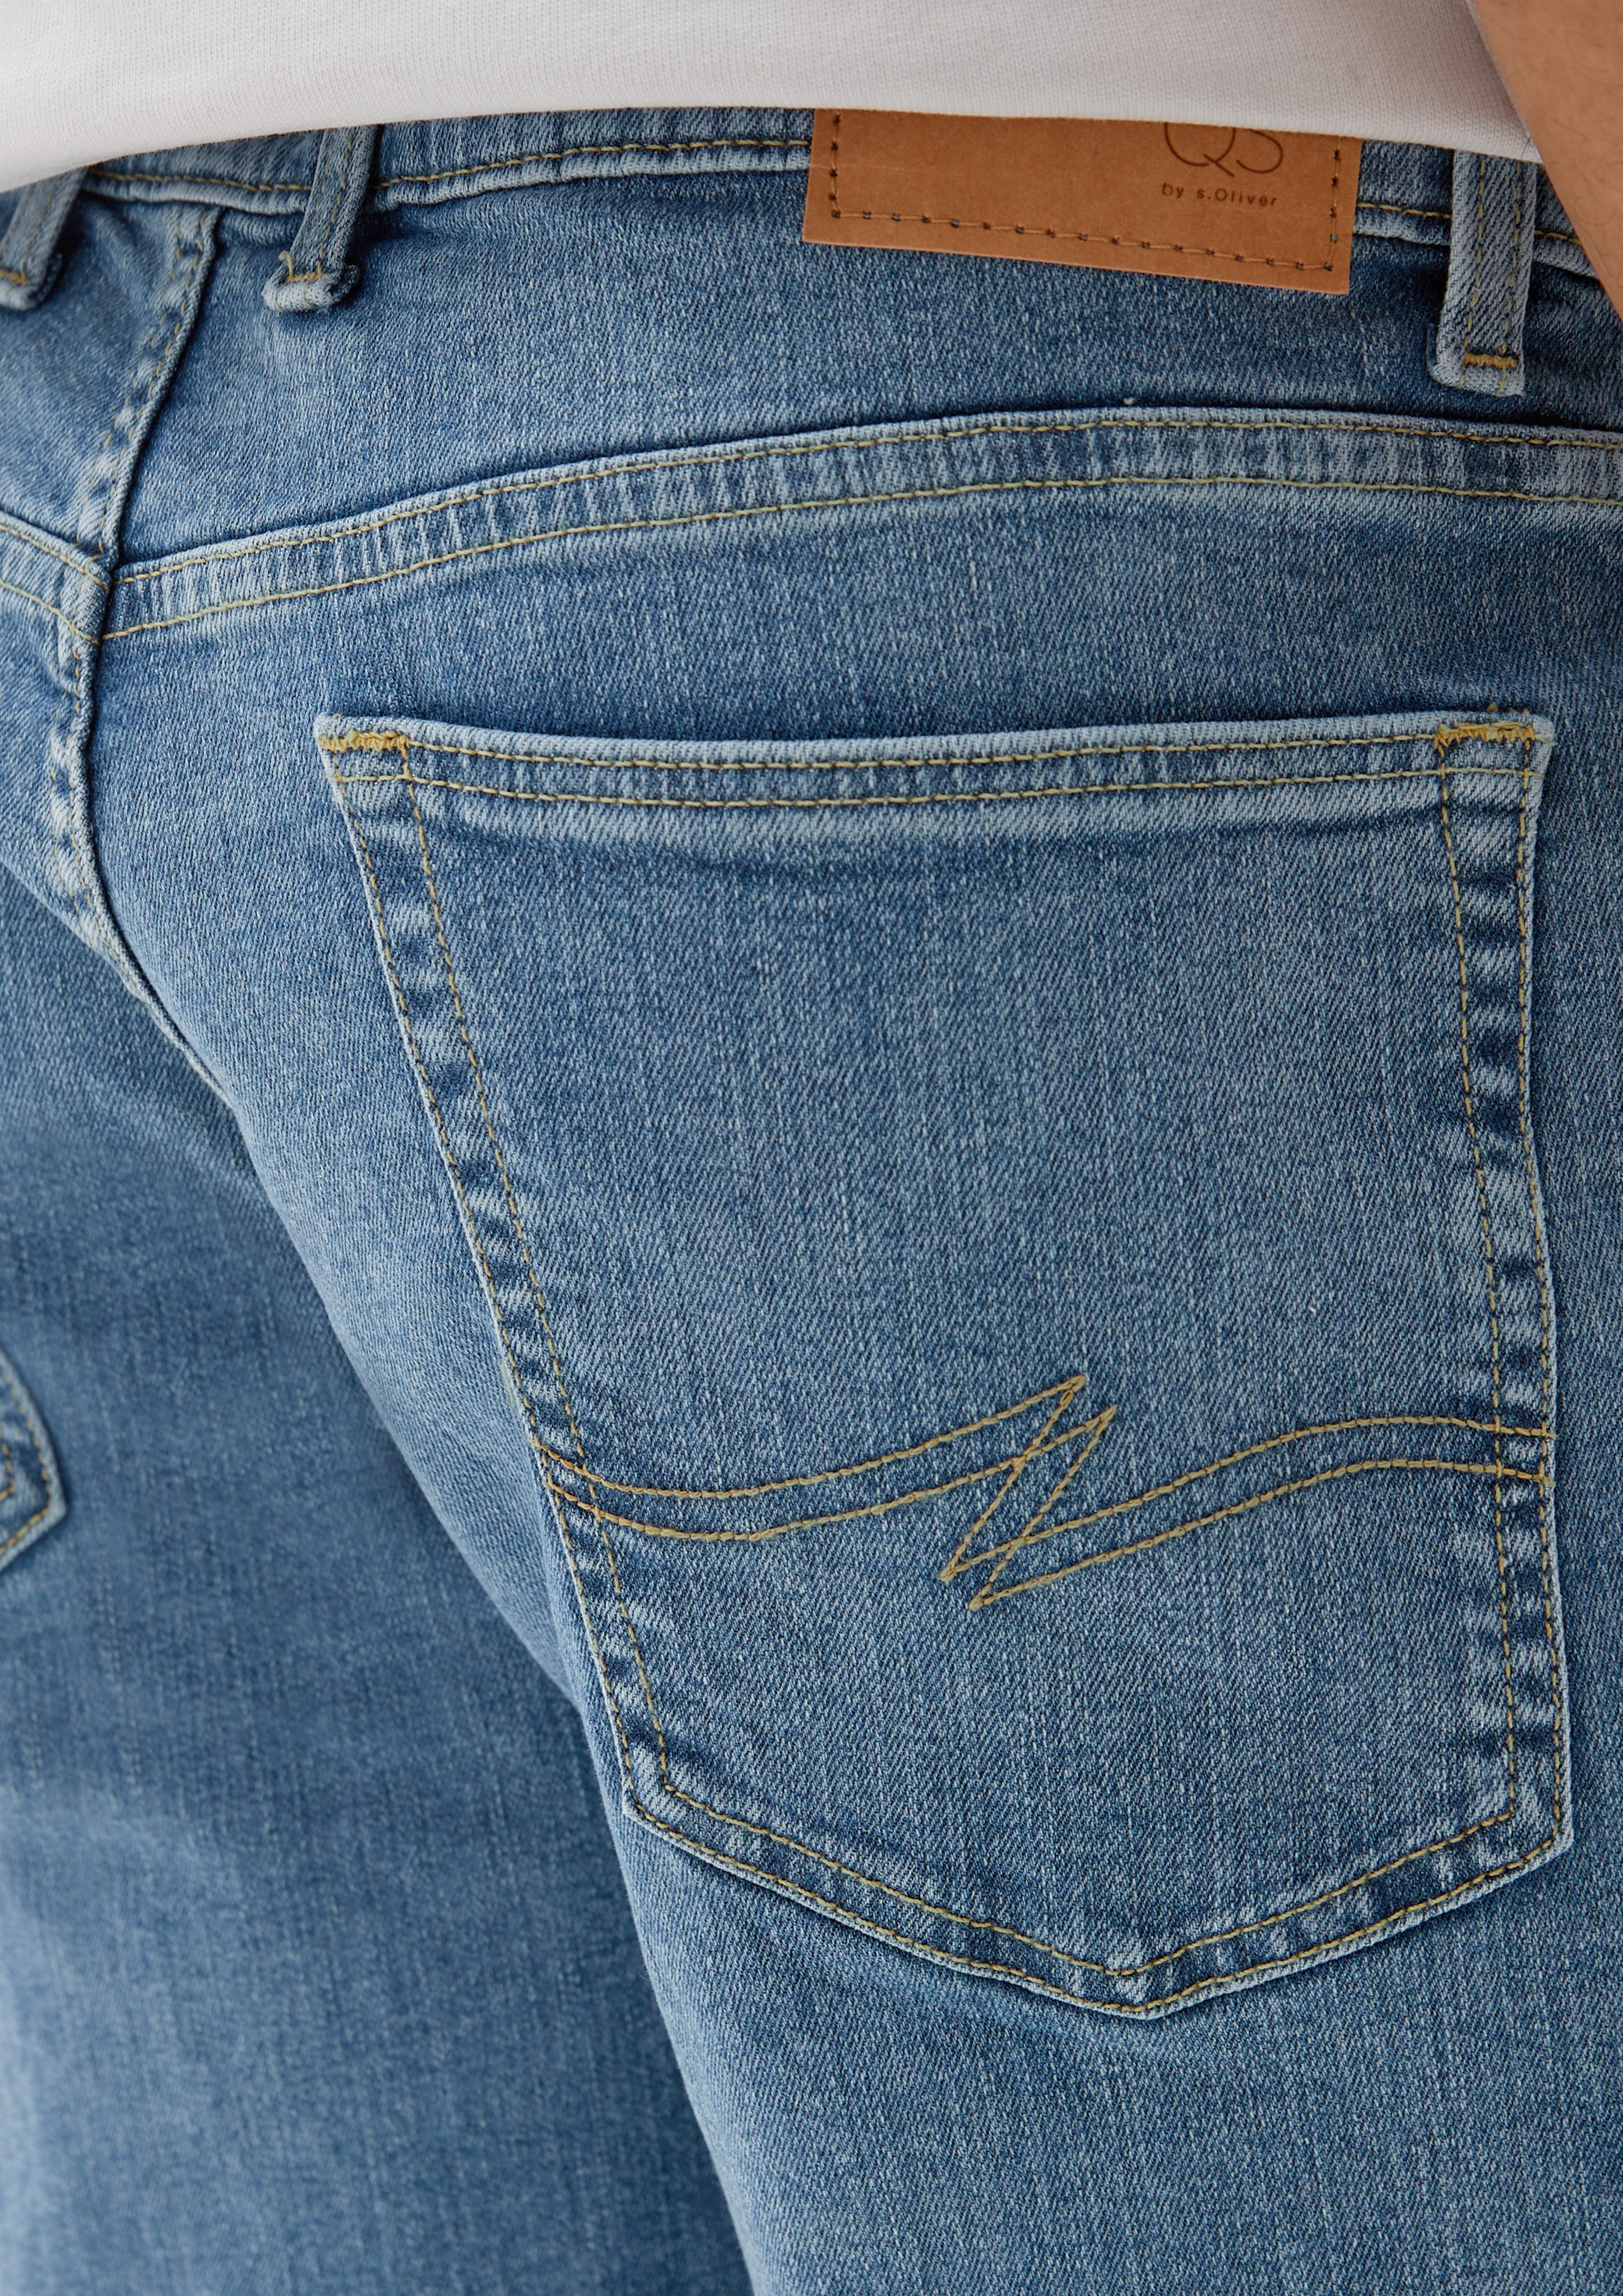 Jeansshorts / Jeans-Bermuda / / Rise Regular QS Leg Fit Waschung Mid John himmelblau Straight